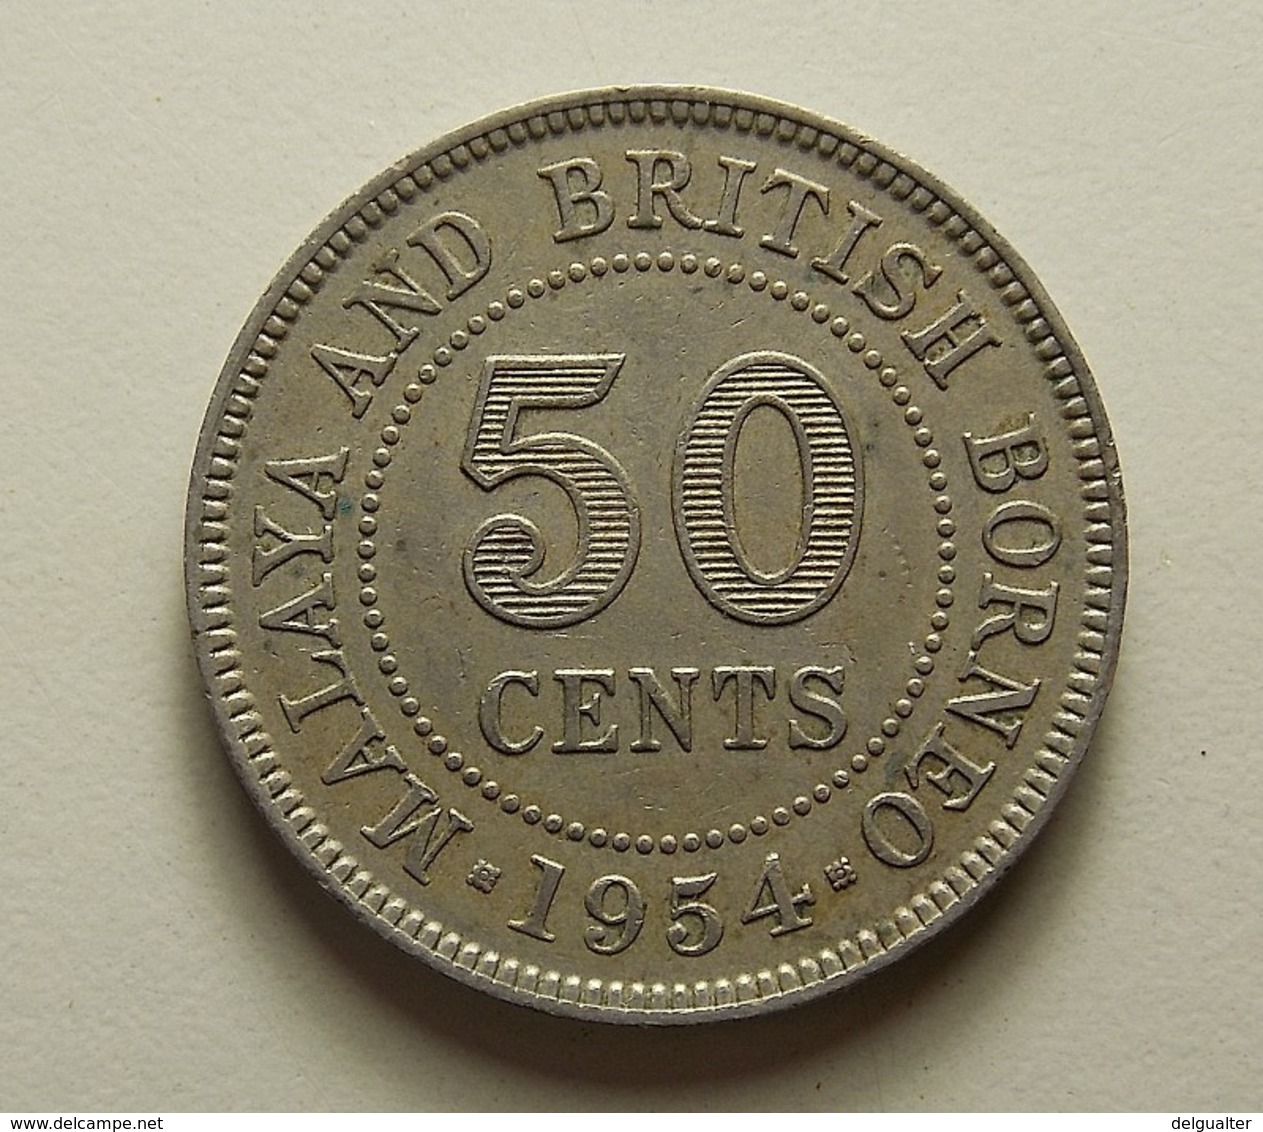 Malaya And British Borneo 50 Cents 1954 - Malaysie